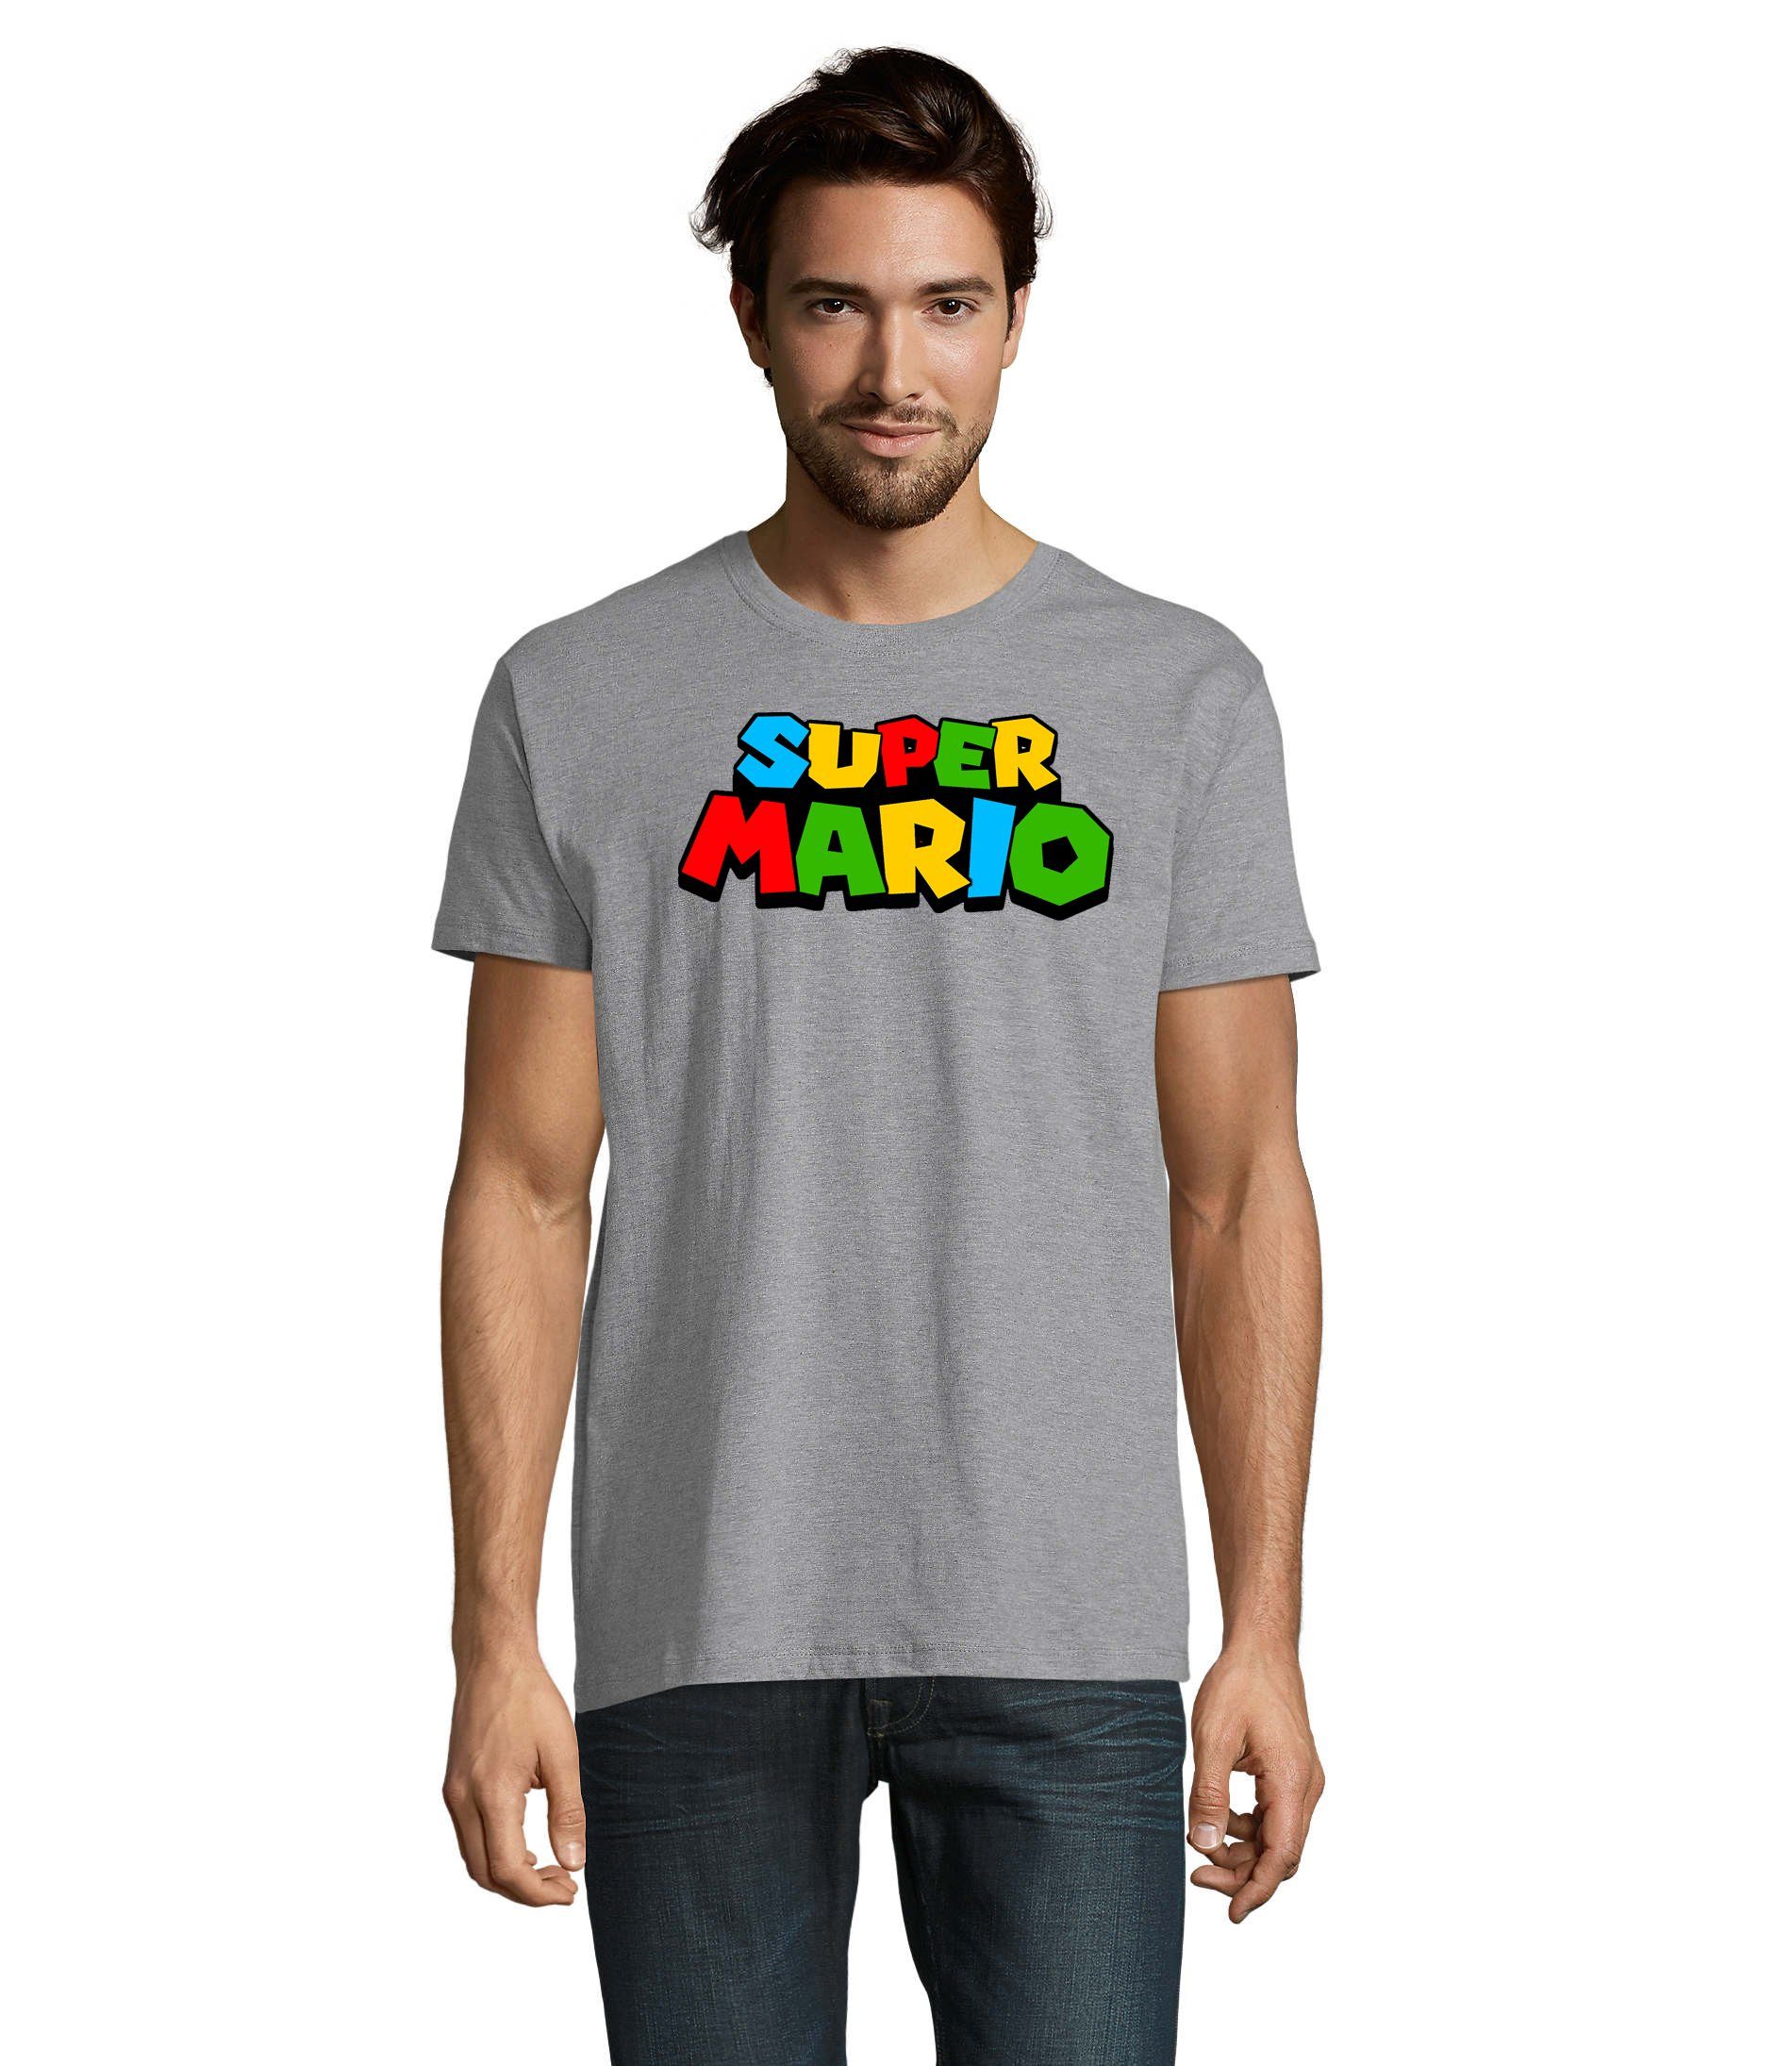 Blondie & Brownie T-Shirt Herren Super Mario Nintendo Gamer Gaming Konsole Grau